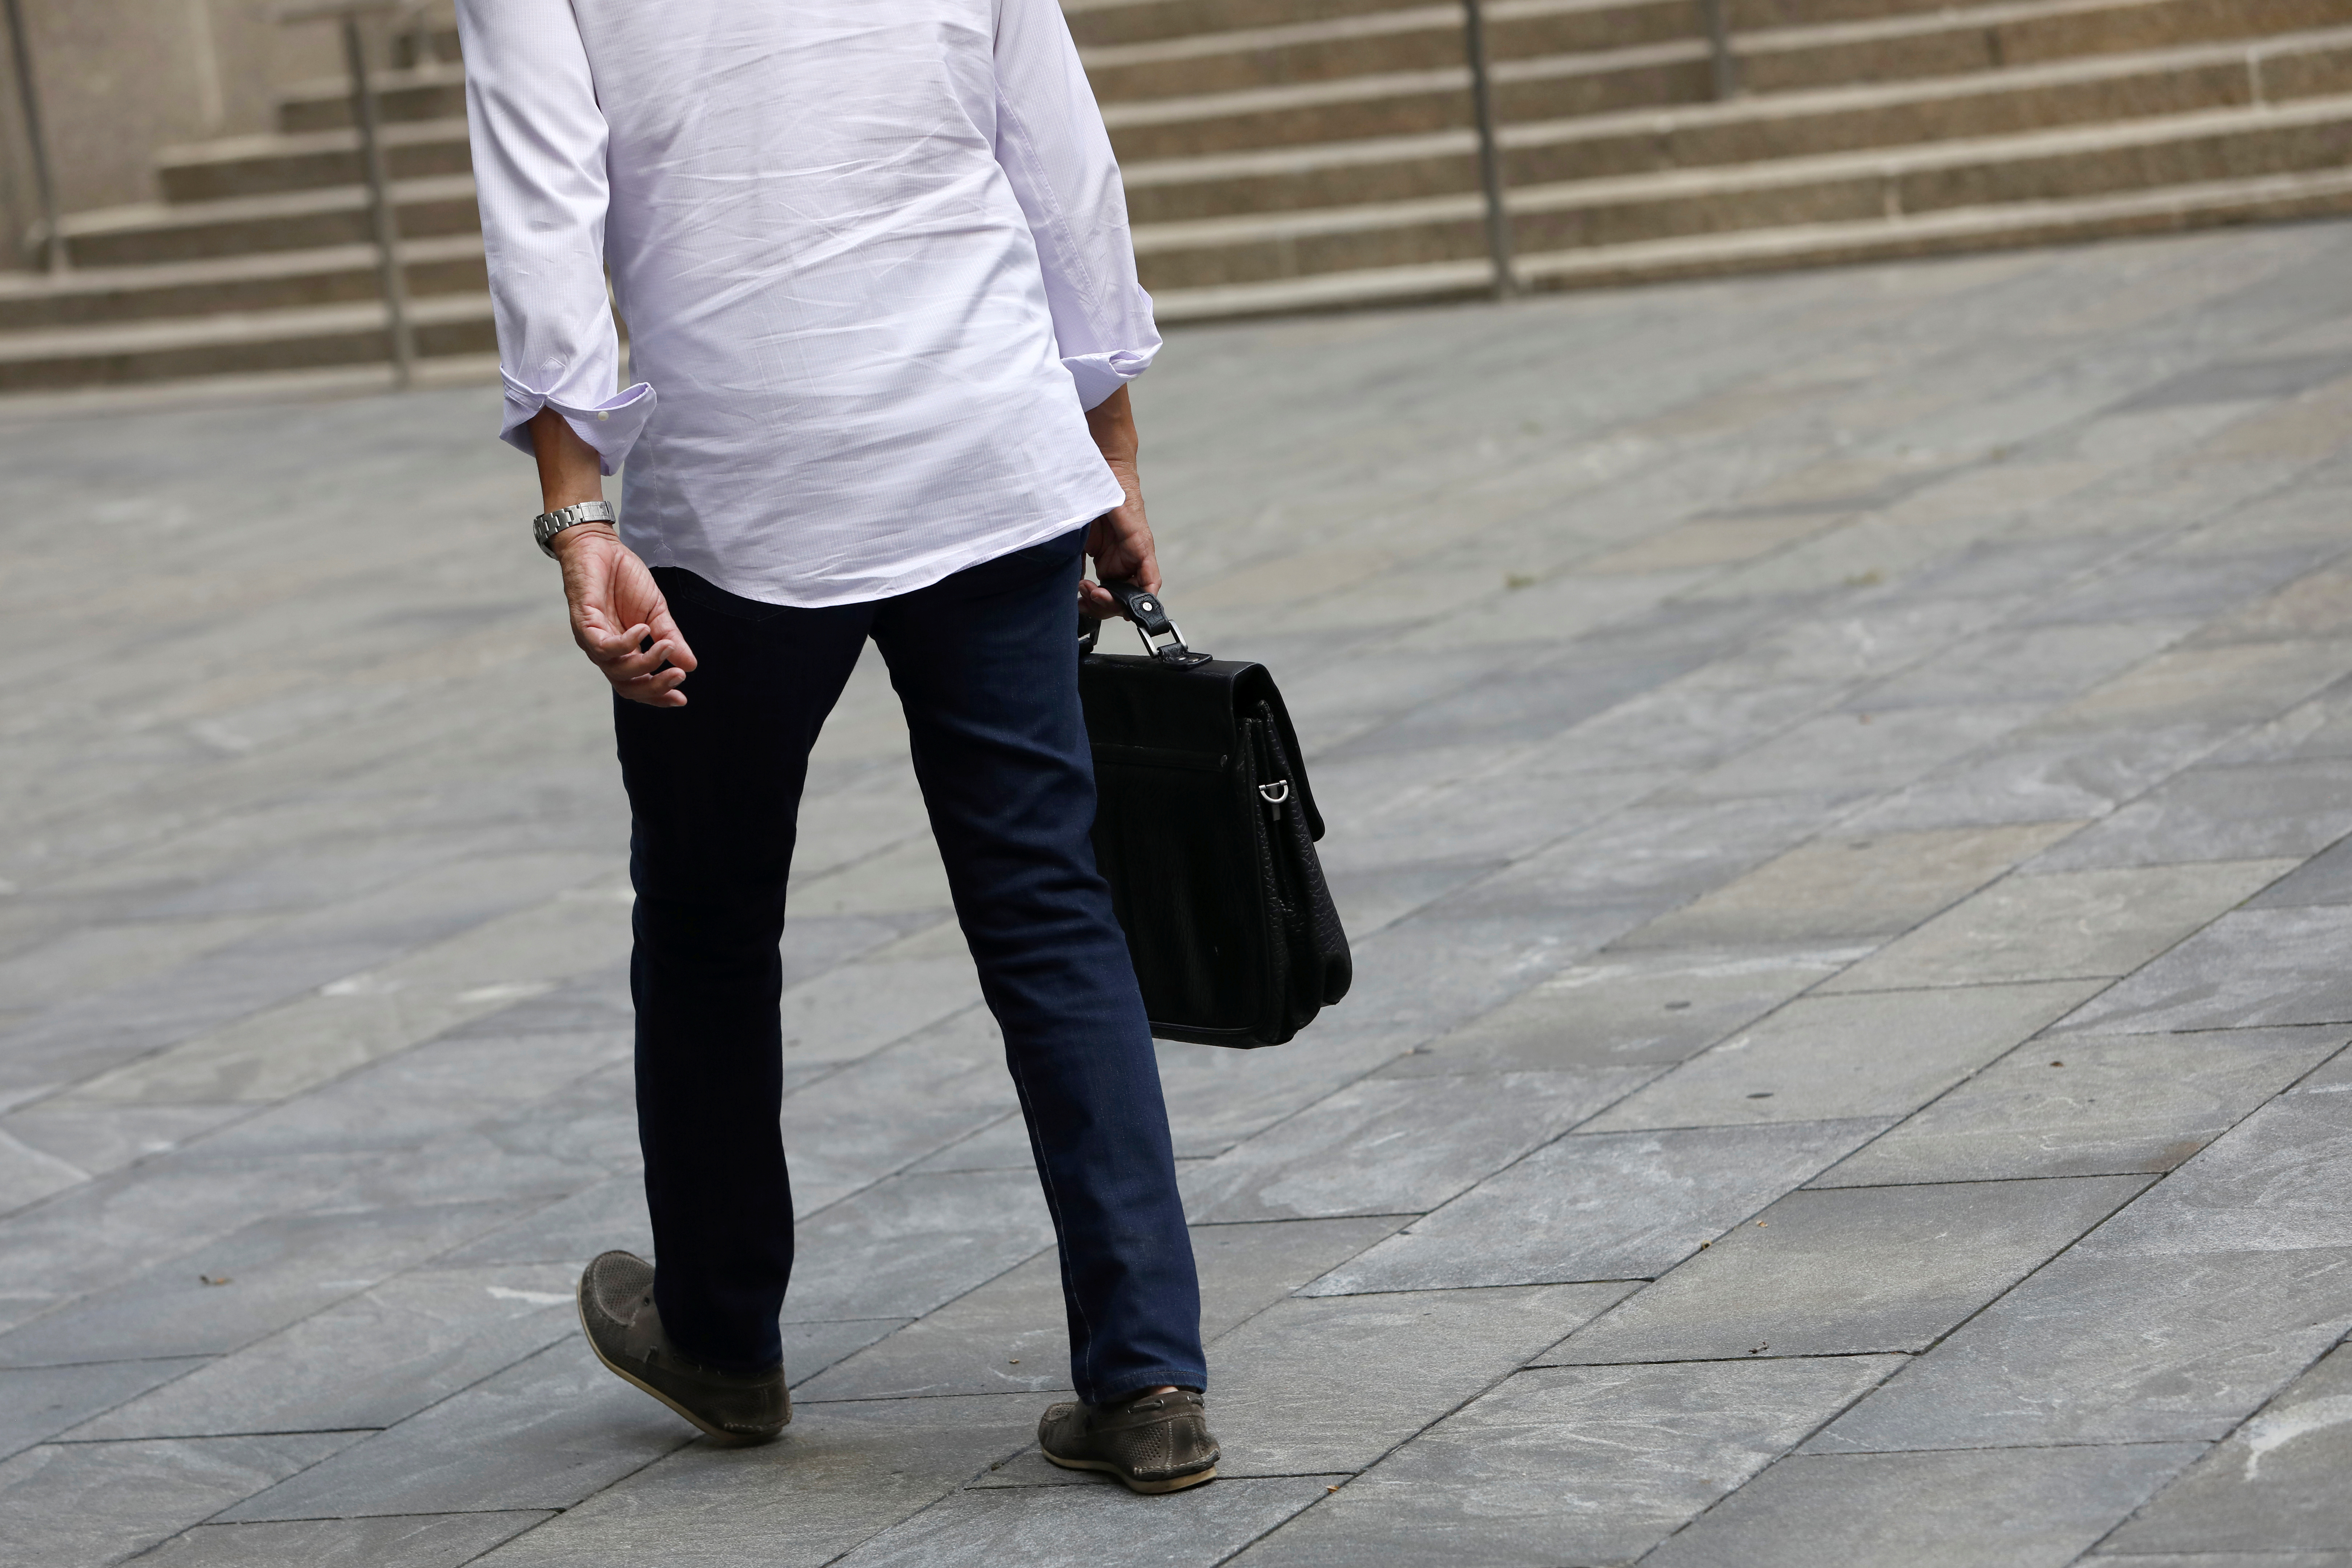 A man walks through the street carrying a briefcase in Manhattan, New York City